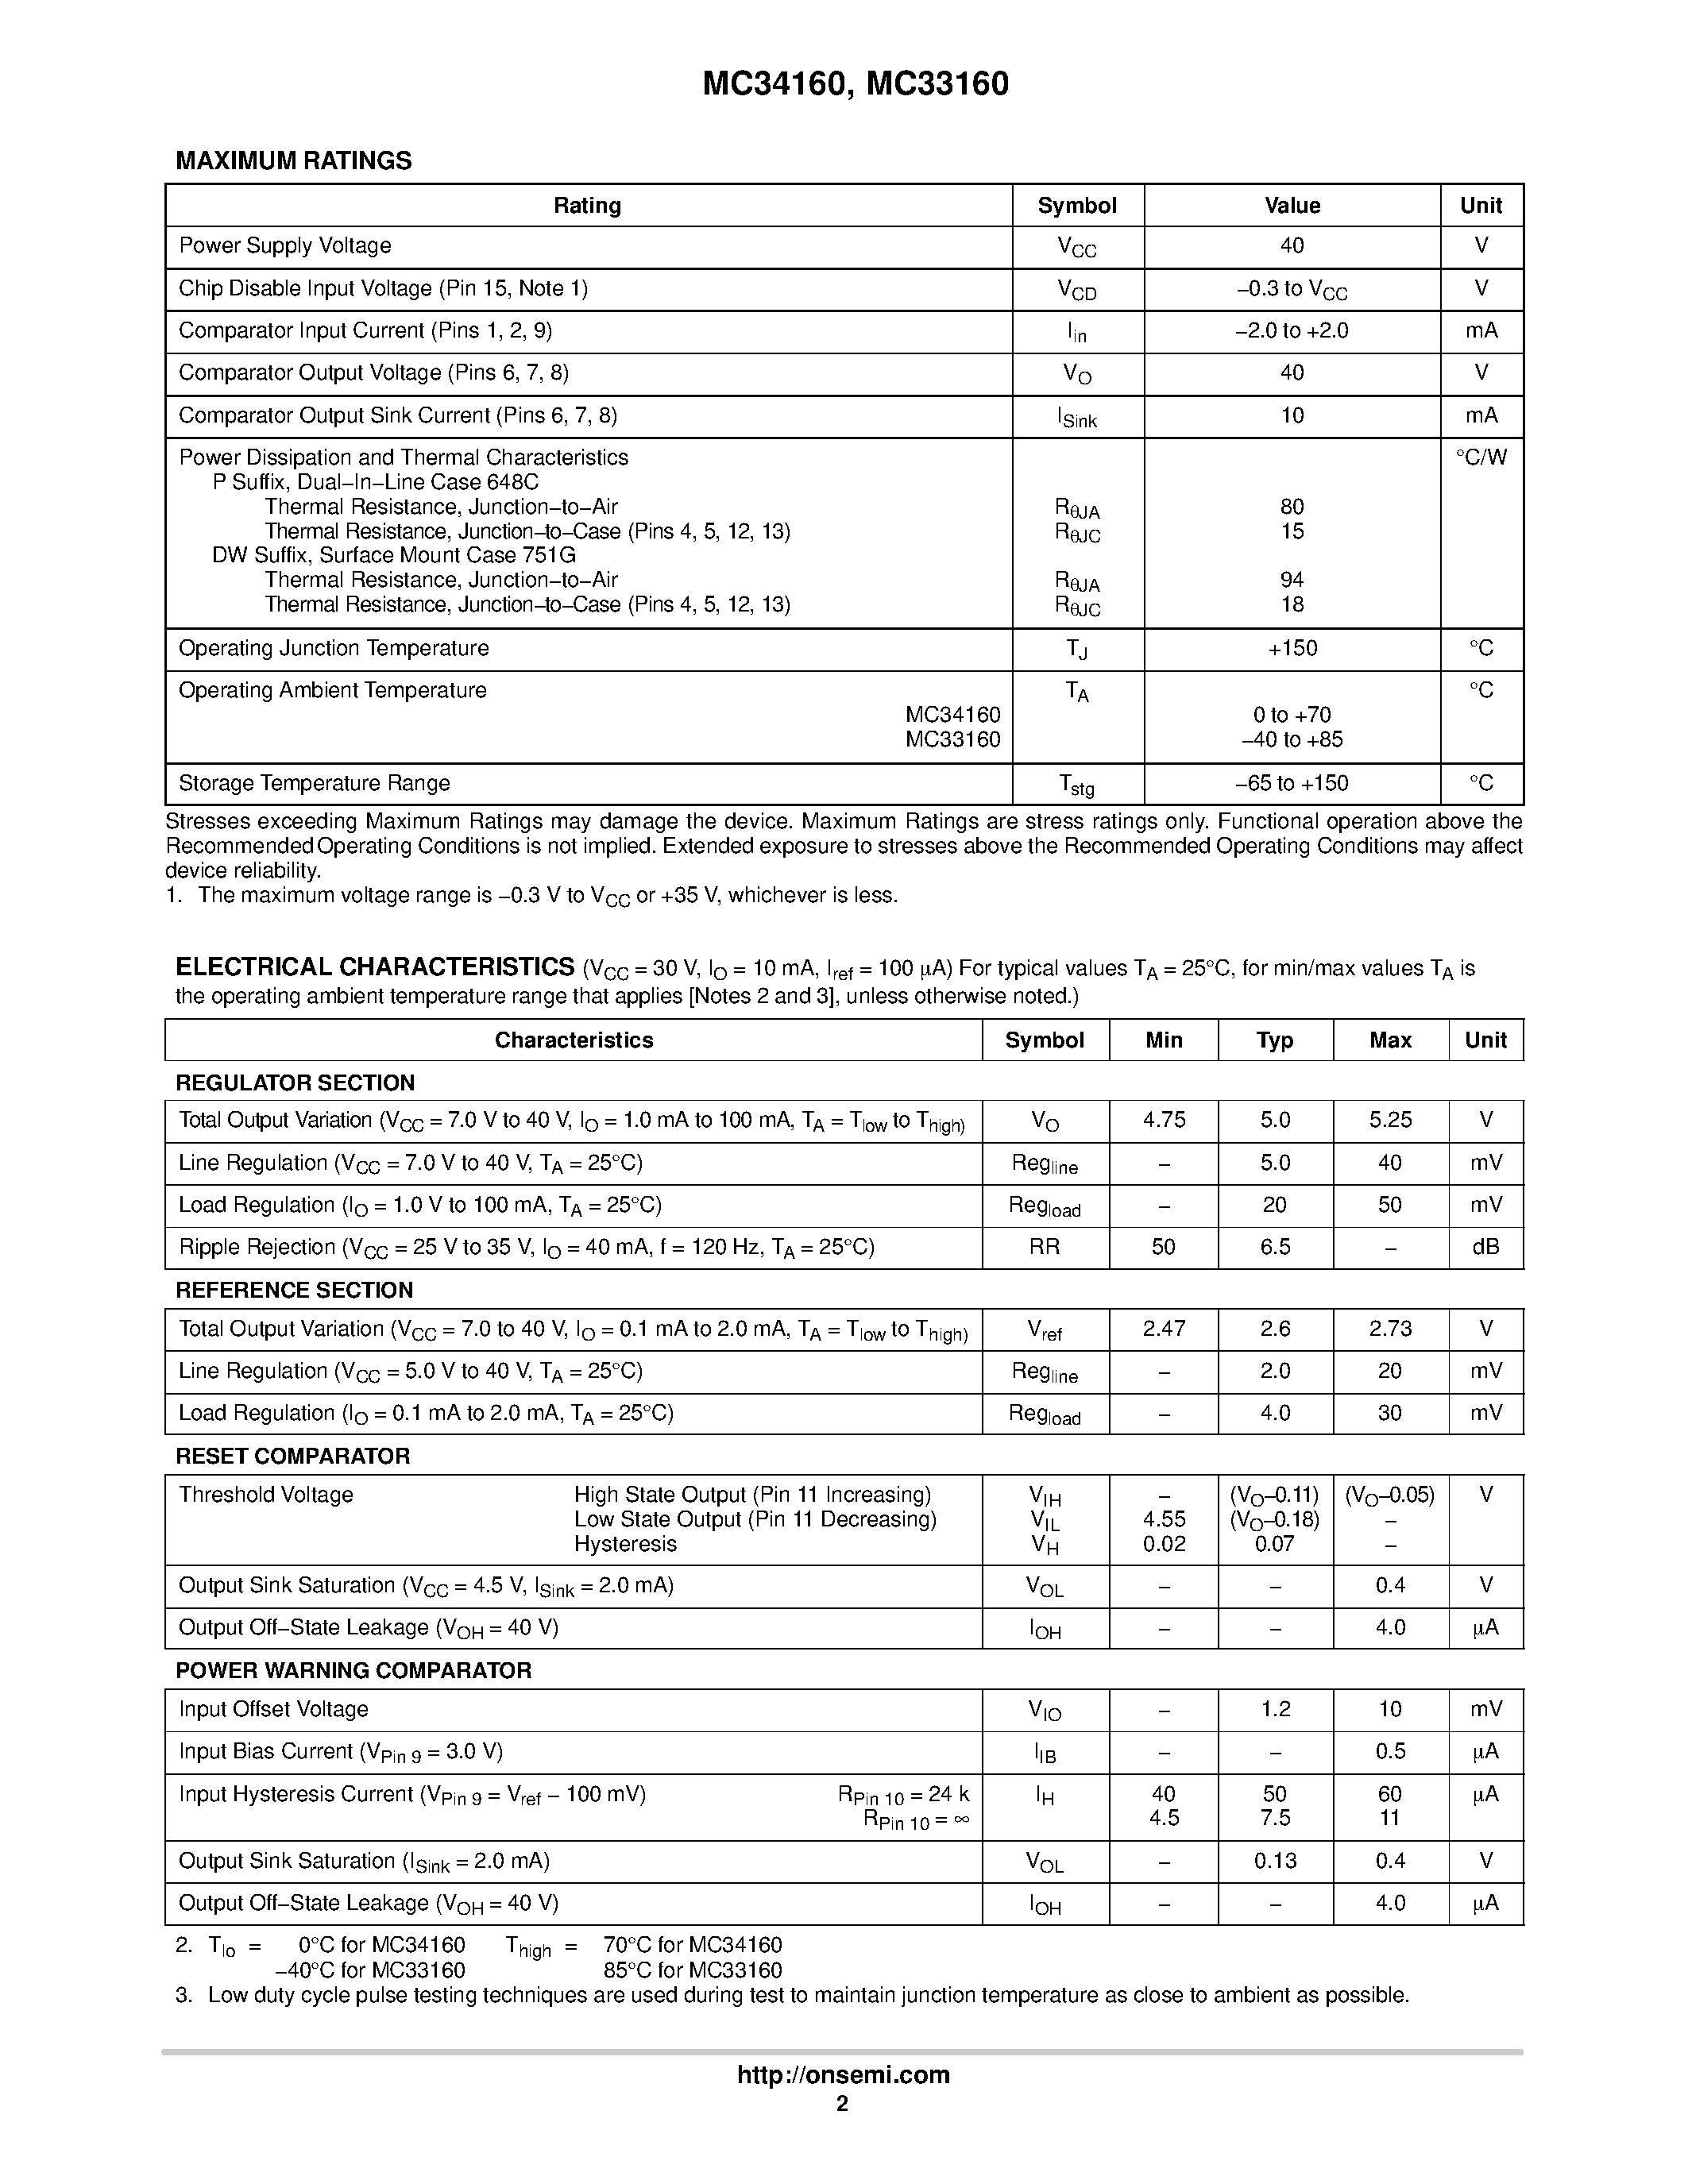 Datasheet MC33160 - (MC33160 / MC34160) Voltage Regulator and Supervisory Circuit page 2